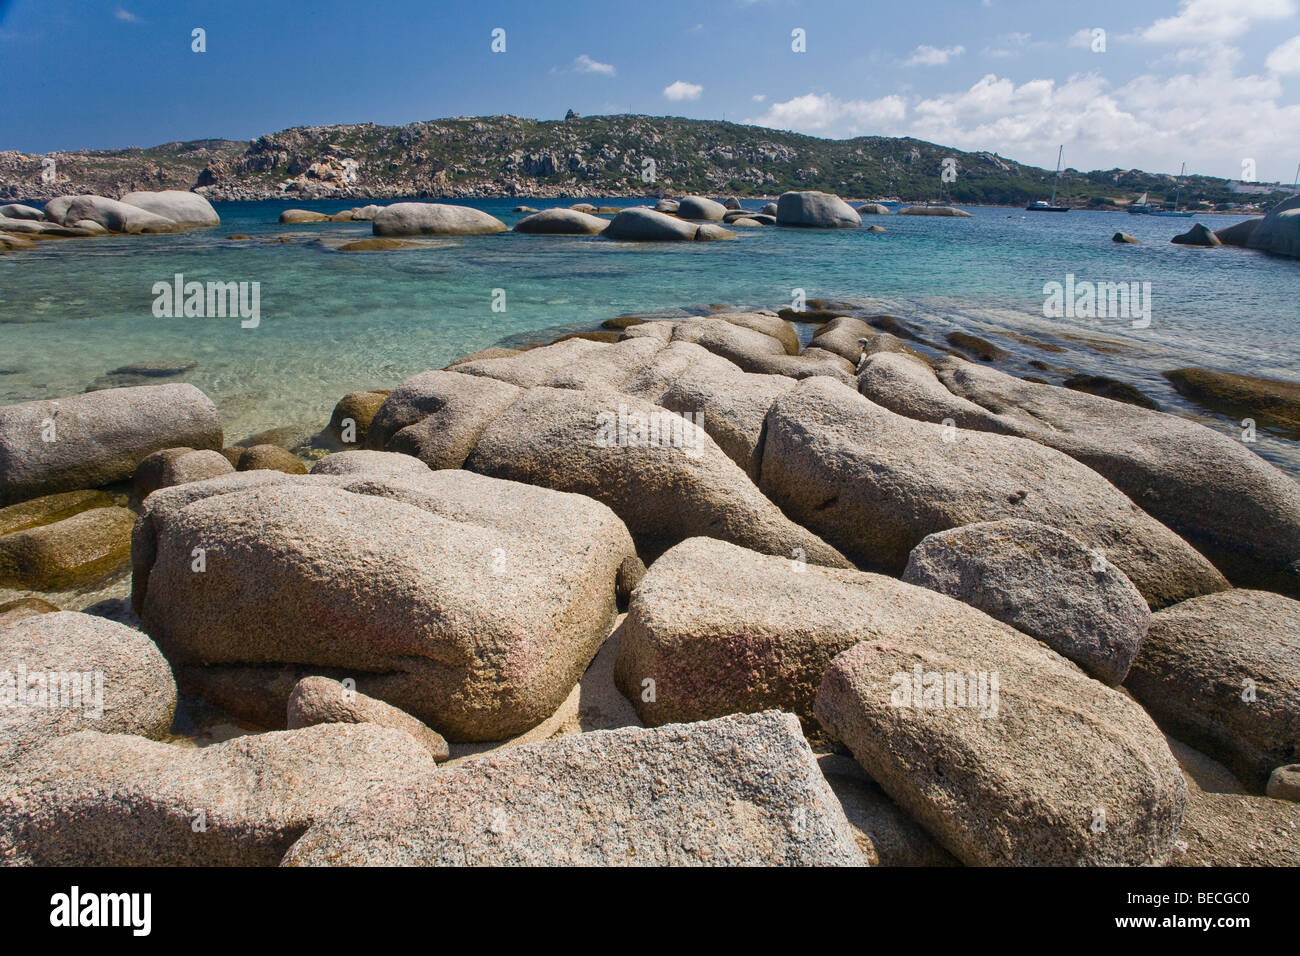 Granite rocks on the beach, Santa Teresa di Gallura, Gallura region, Sardinia, Italy Stock Photo